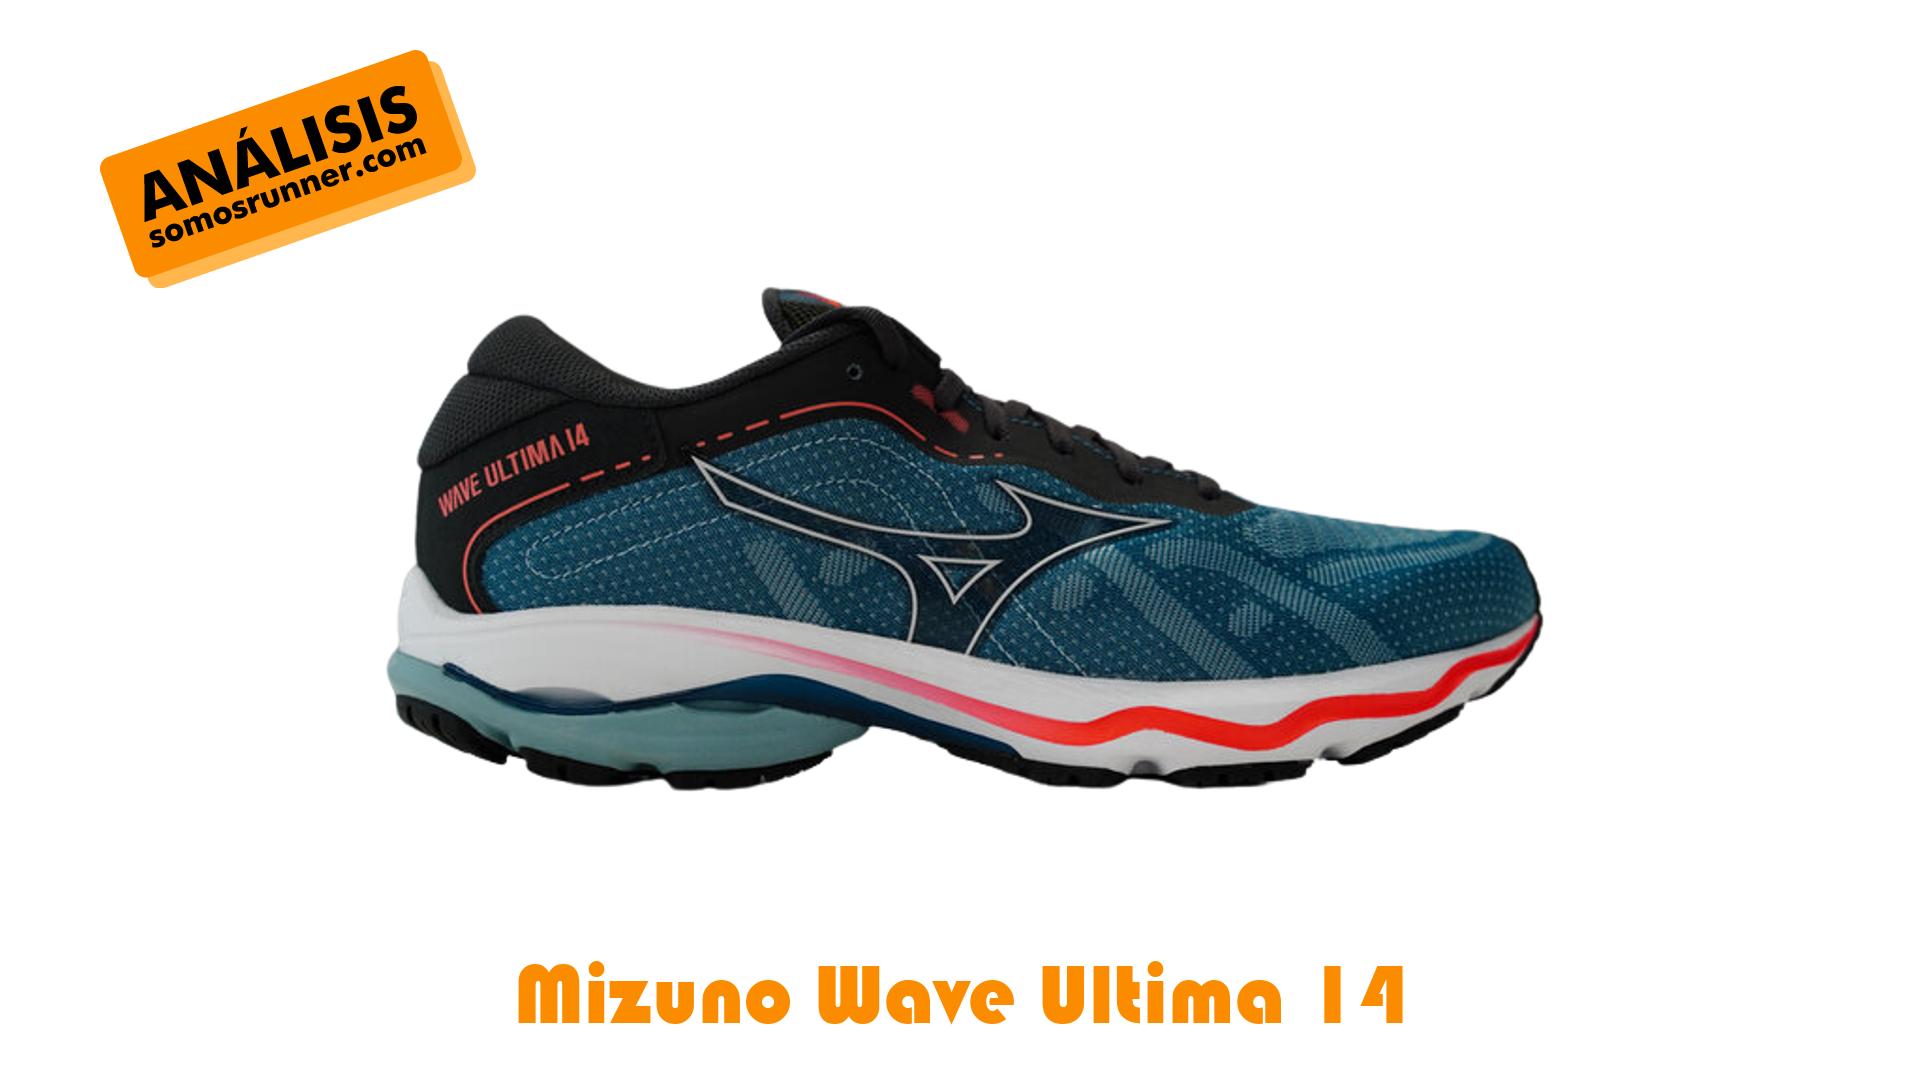 Mizuno Wave Ultima 14